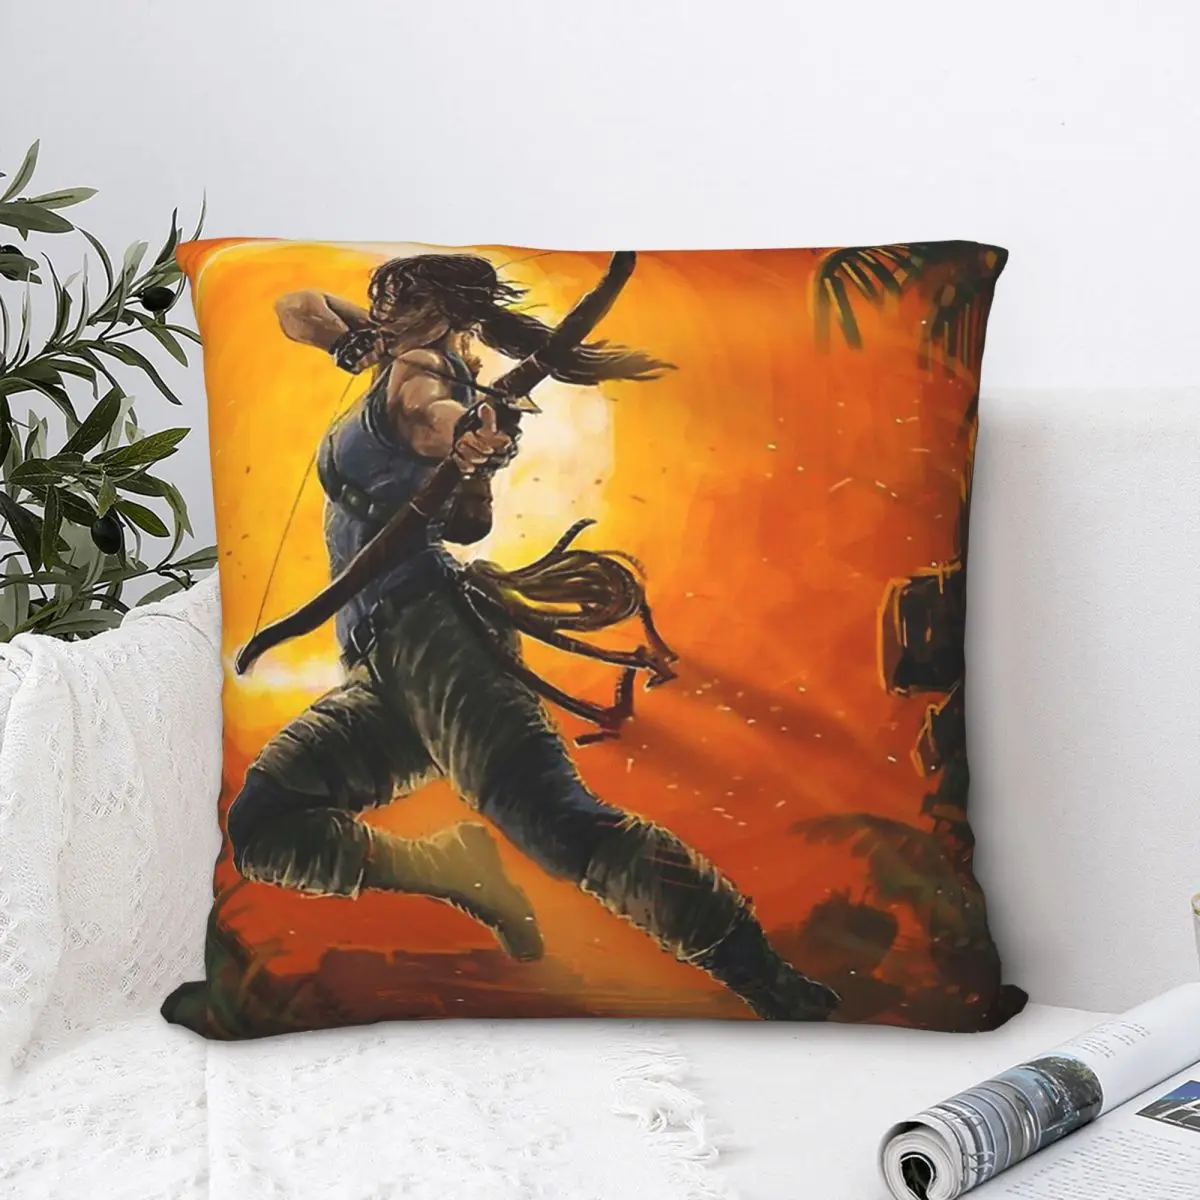 

Lara Cool Hug Pillowcase Tomb Raider Advanture Game Backpack Cushion Sofa DIY Printed Office Coussin Covers Decorative